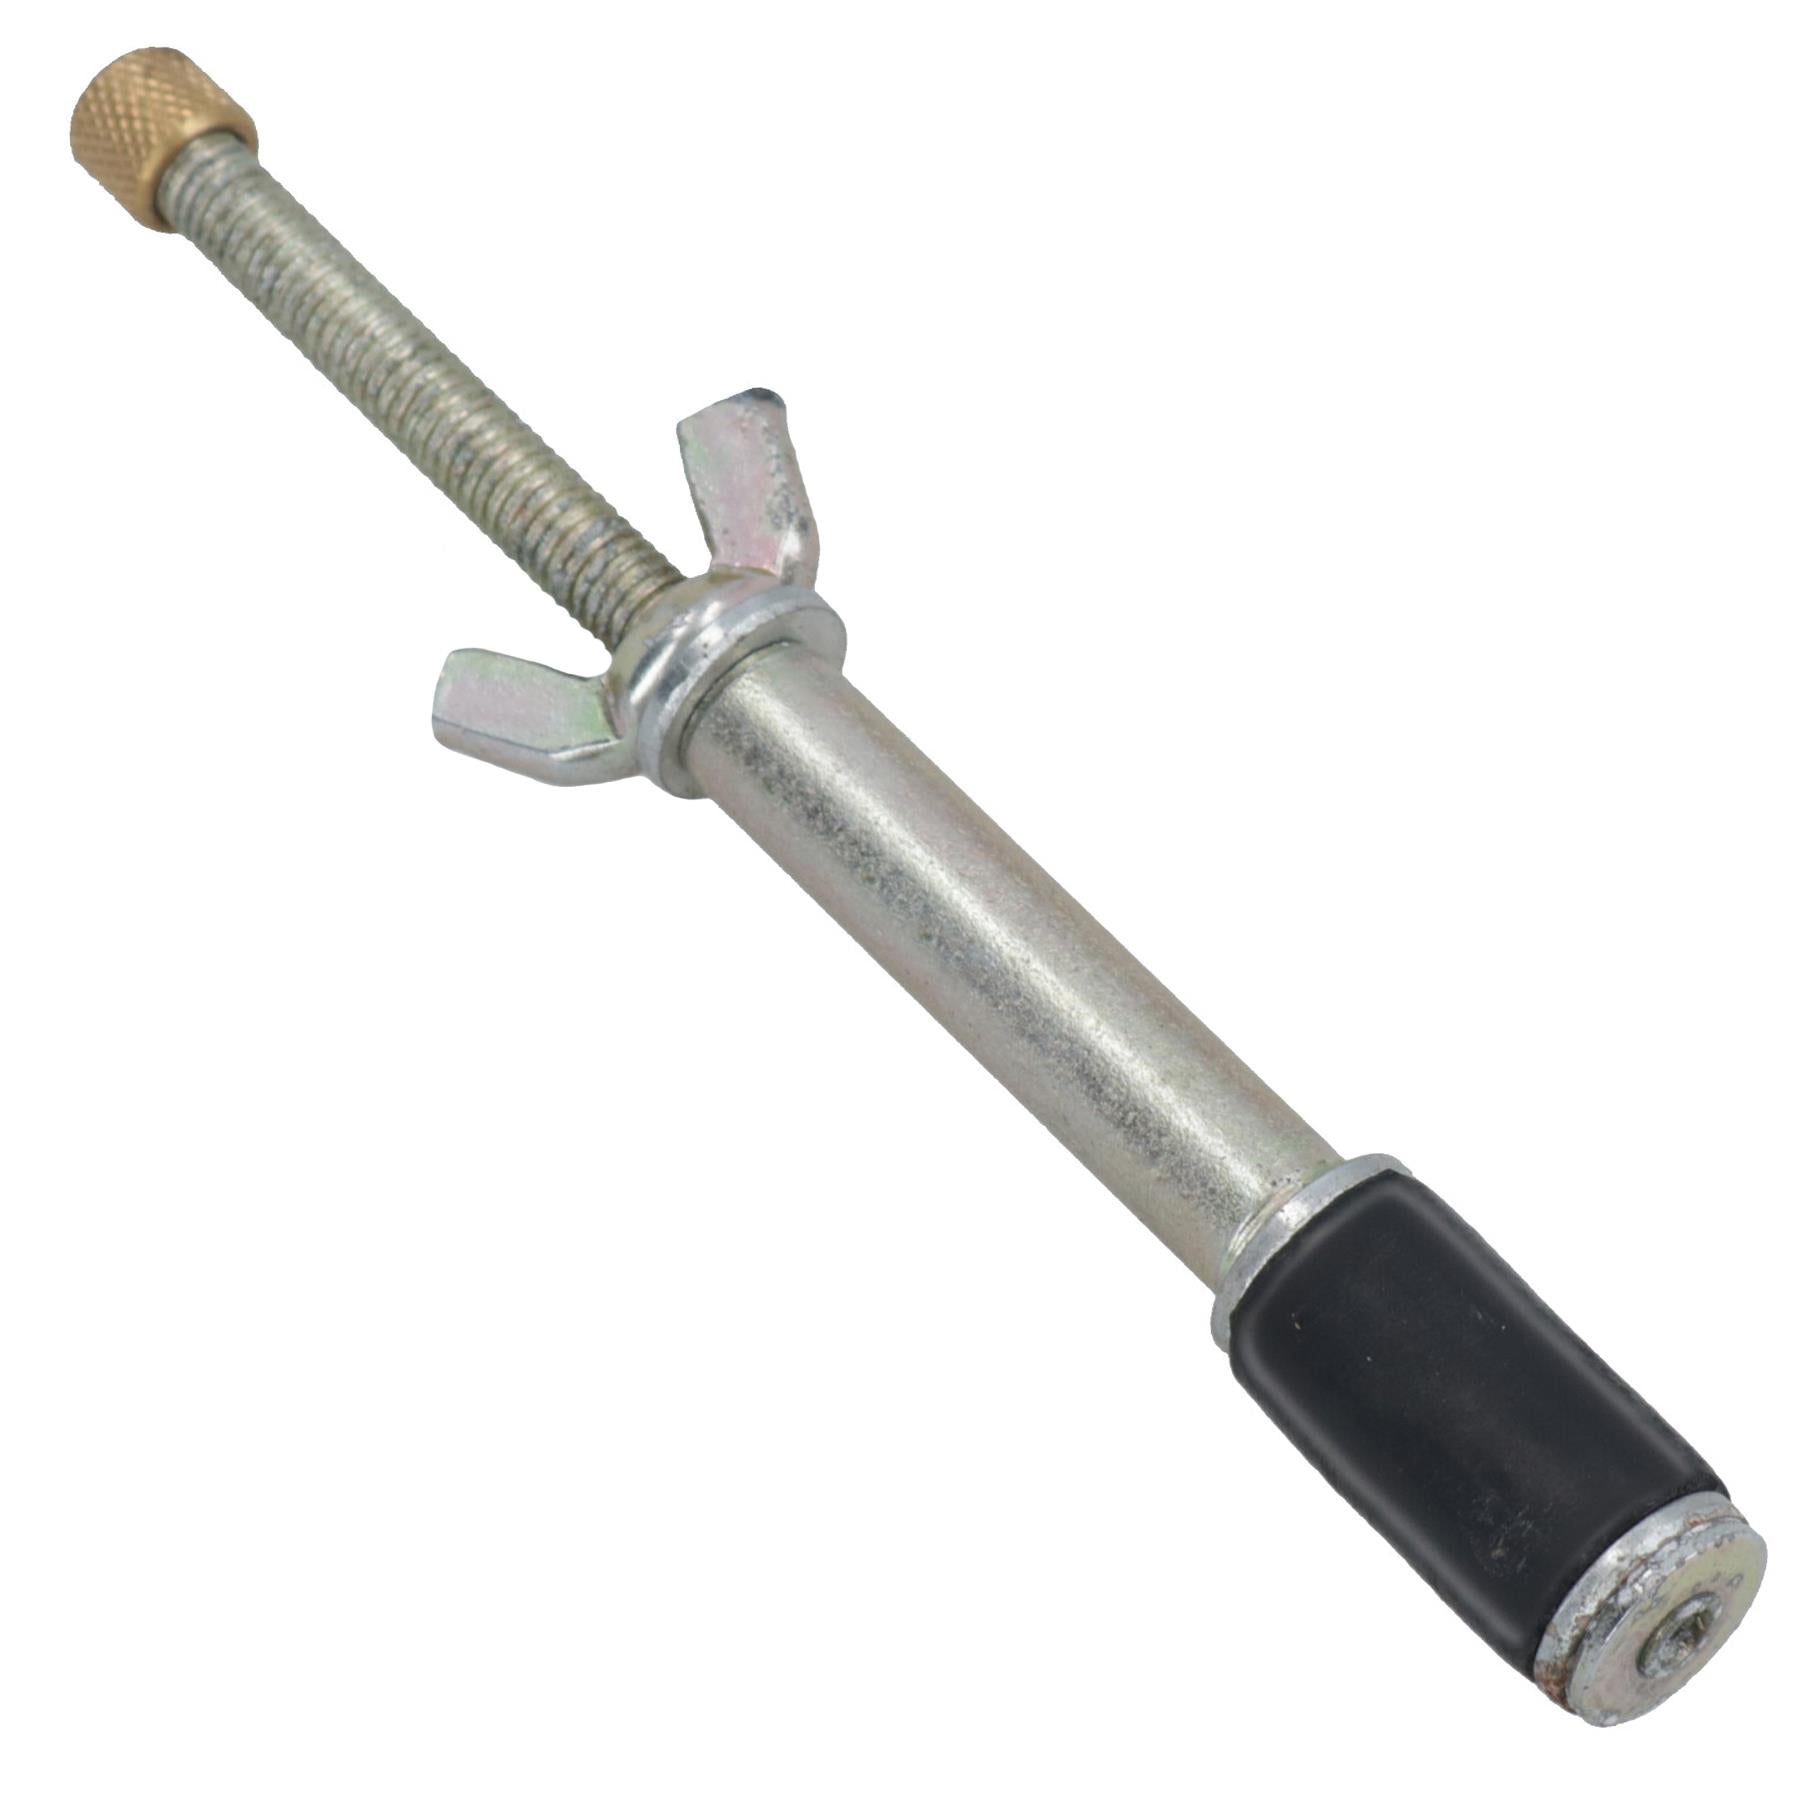 Steel Drain Test Pipe Bung Plug 0.5"- 1.5" (12-38mm) Plumbing Copper MDPE Tube